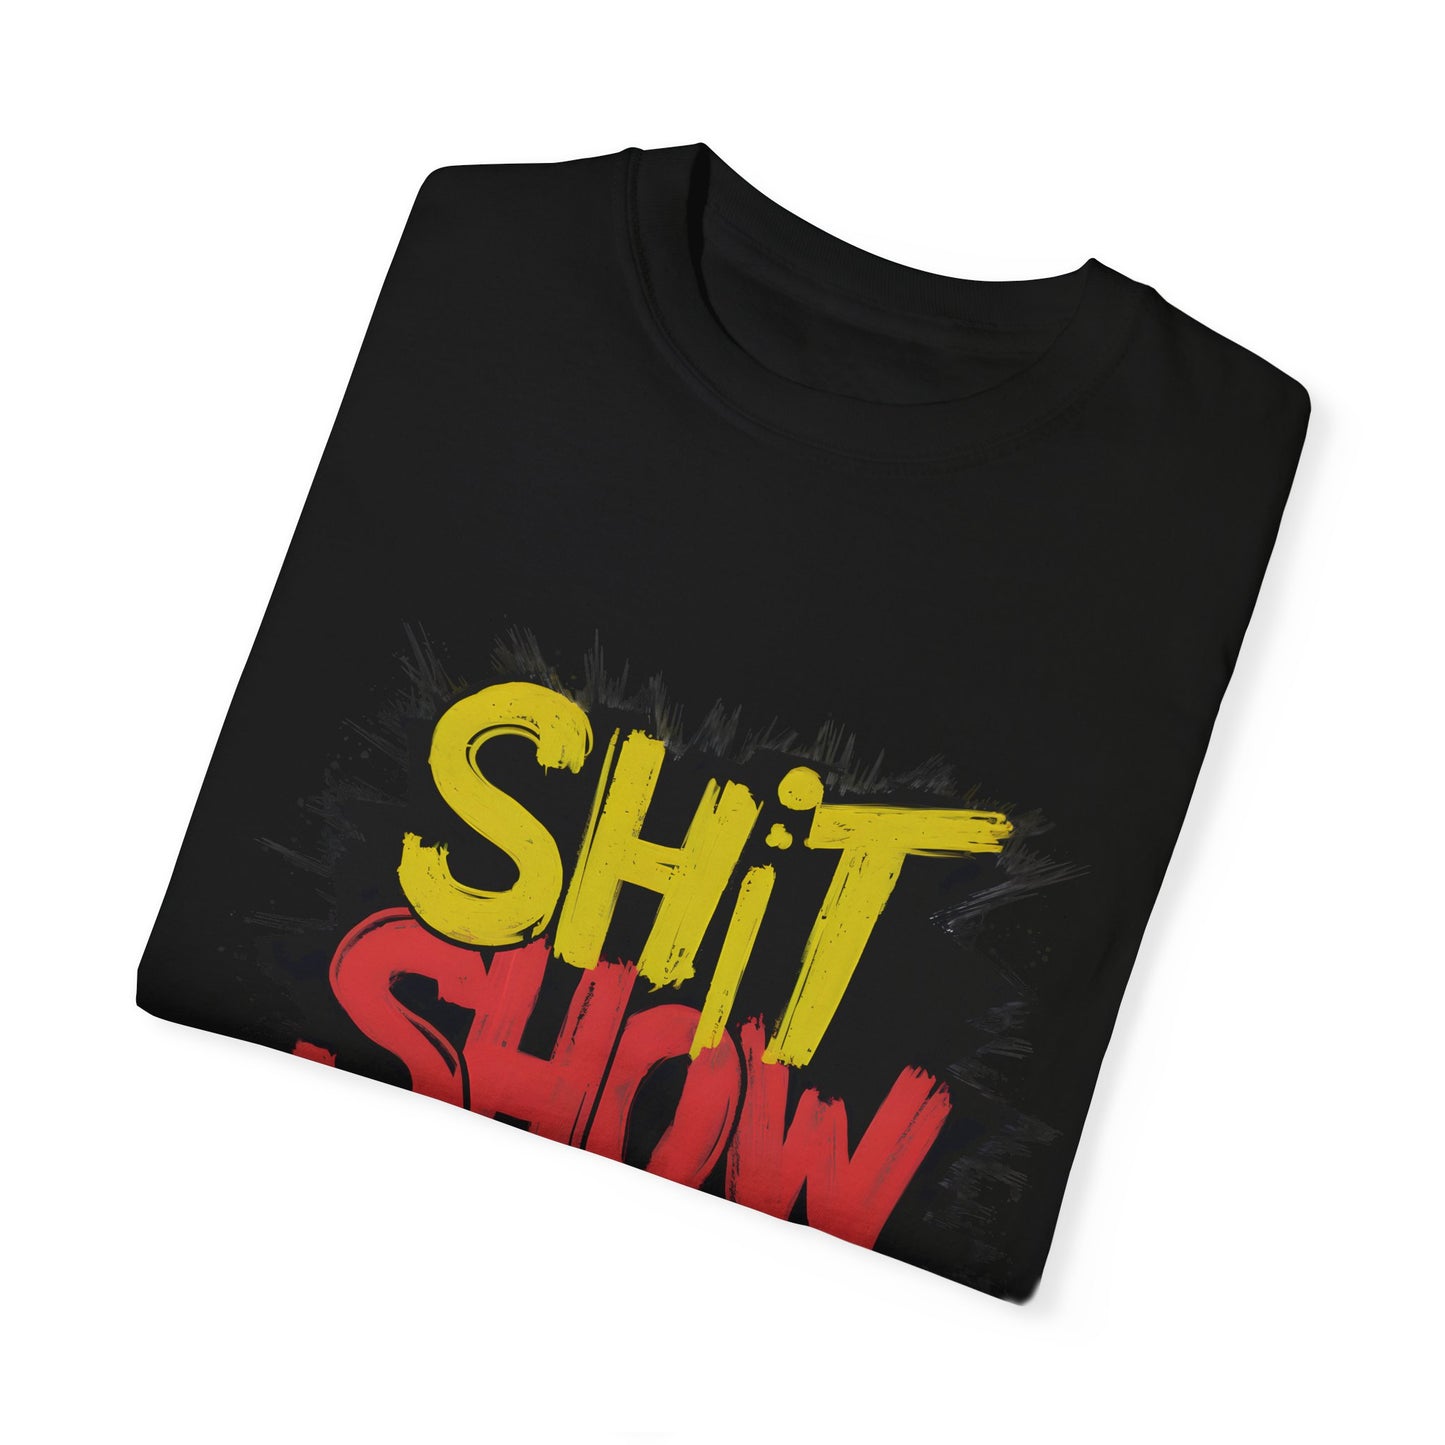 Shit Show Supervisor Urban Sarcastic Graphic Unisex Garment Dyed T-shirt Cotton Funny Humorous Graphic Soft Premium Unisex Men Women Black T-shirt Birthday Gift-17